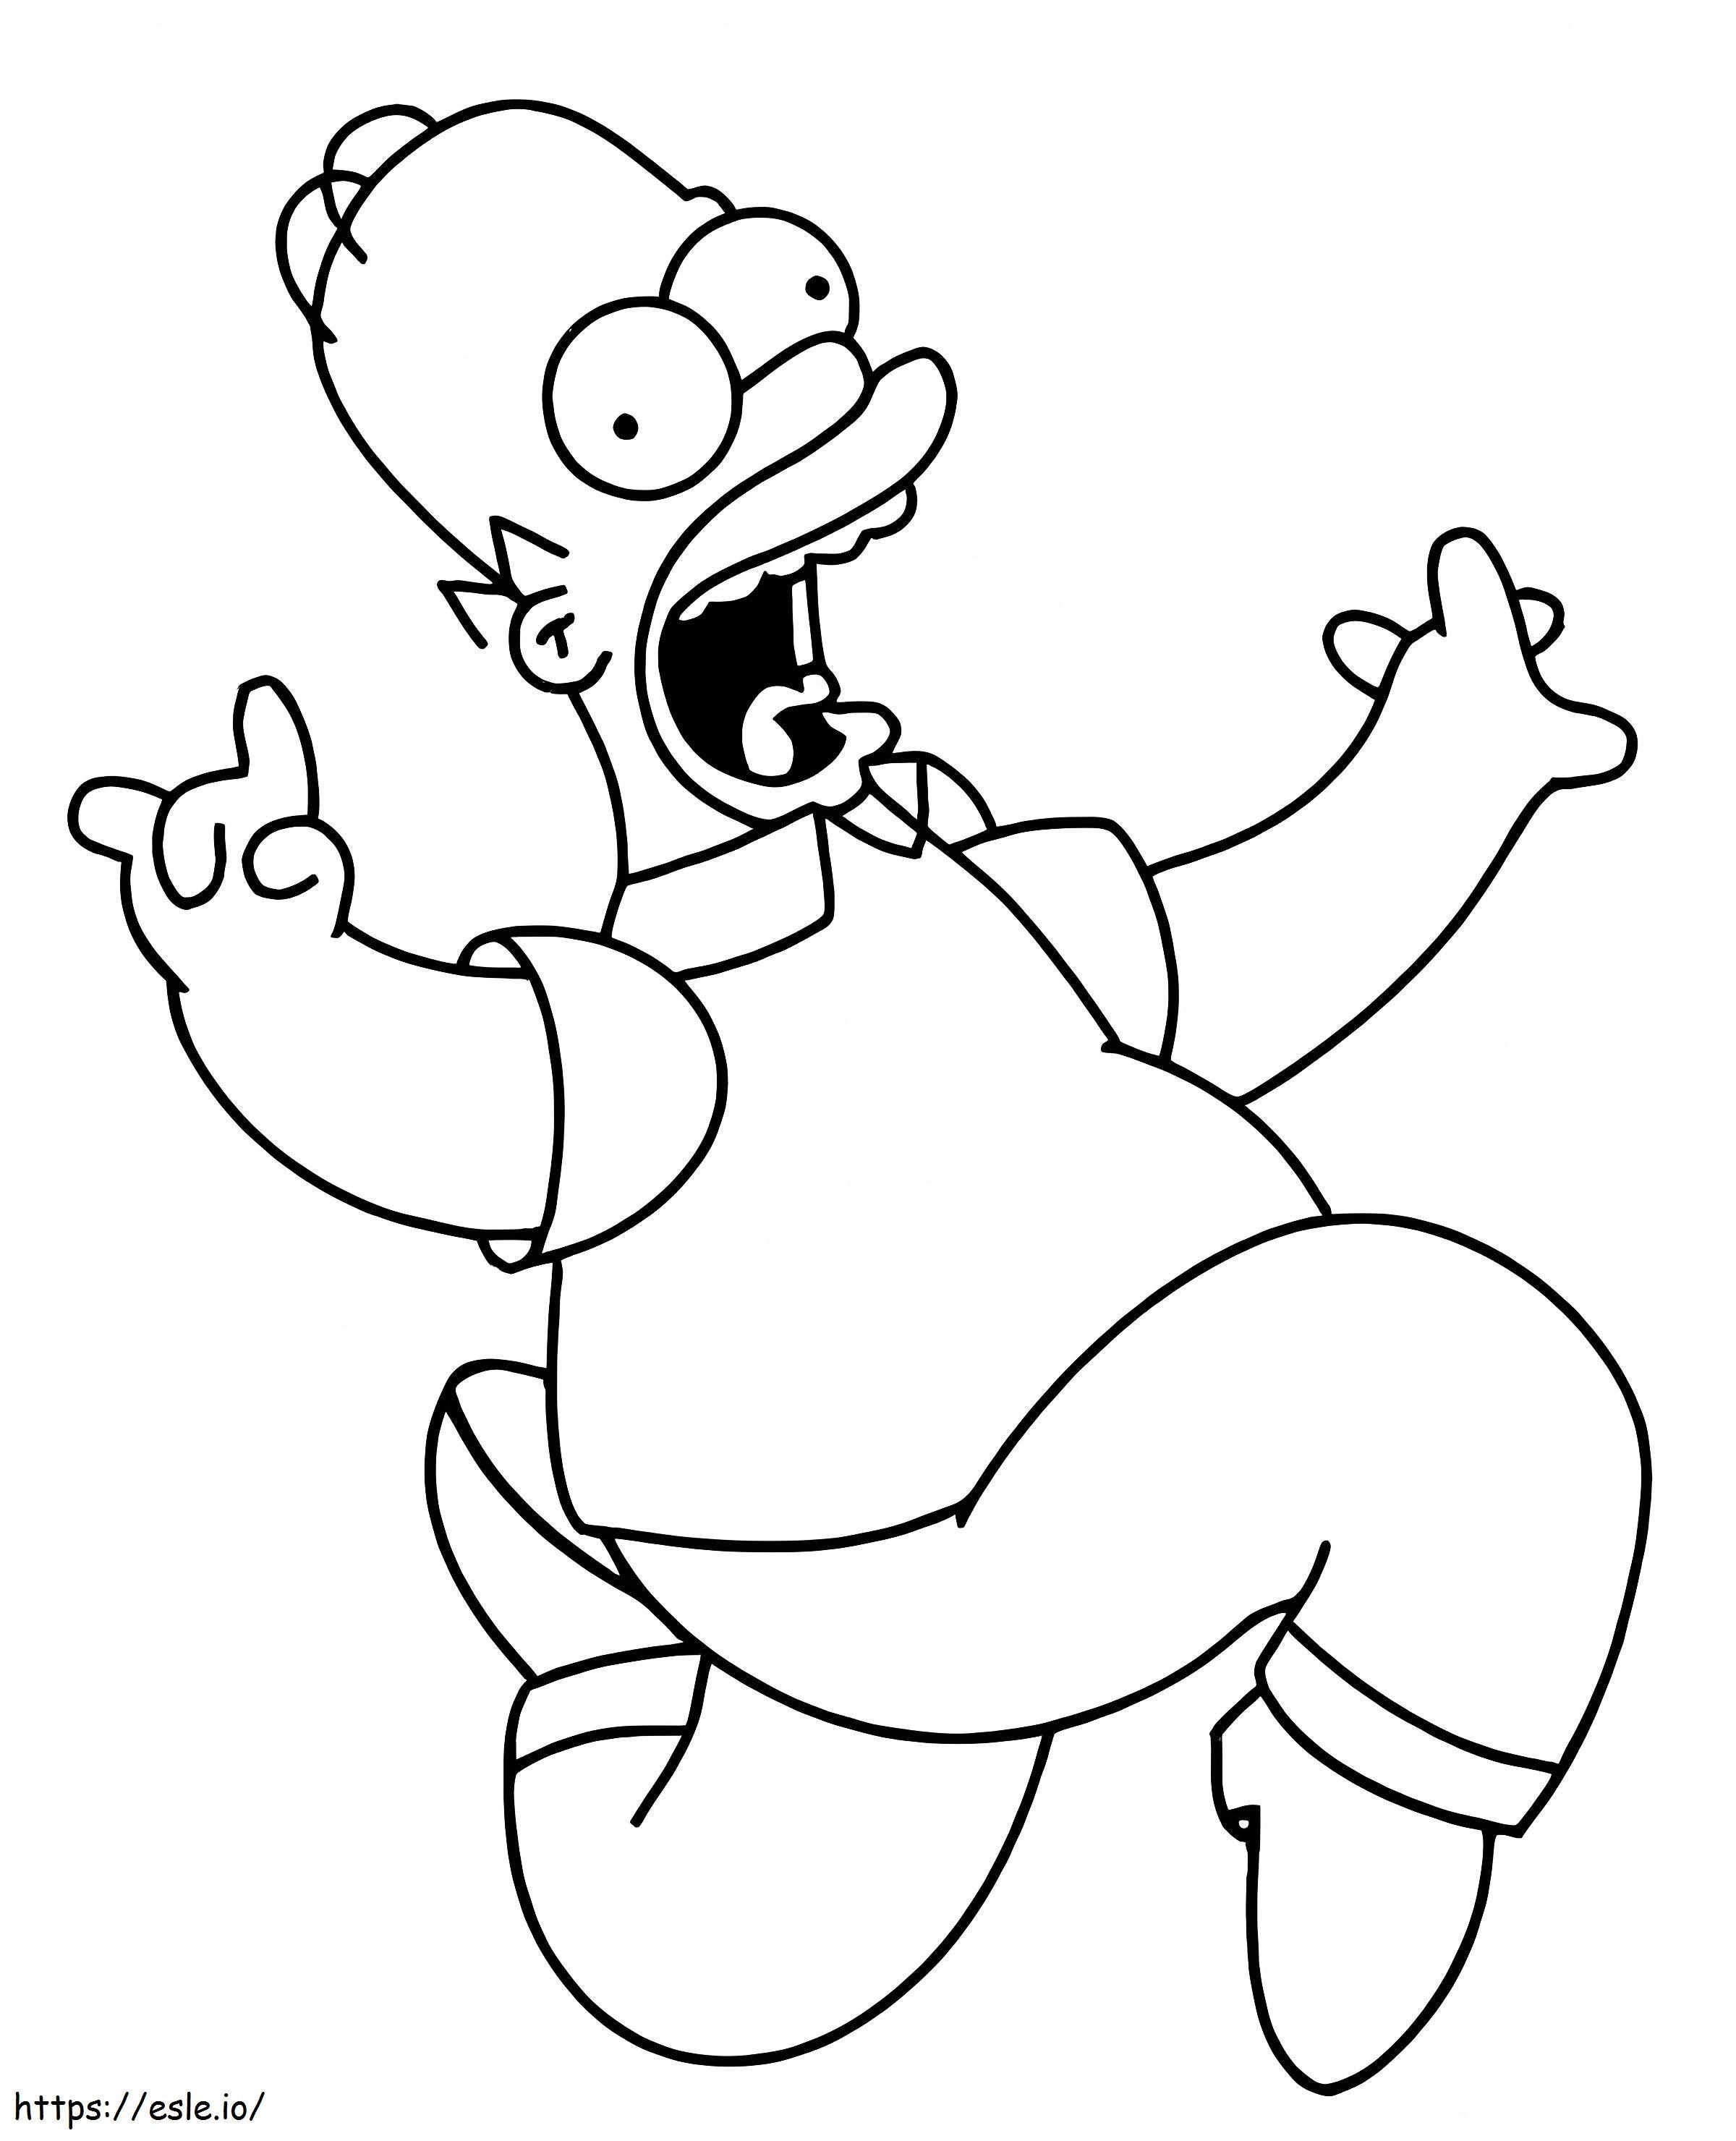 Lustiger Homer Simpson ausmalbilder